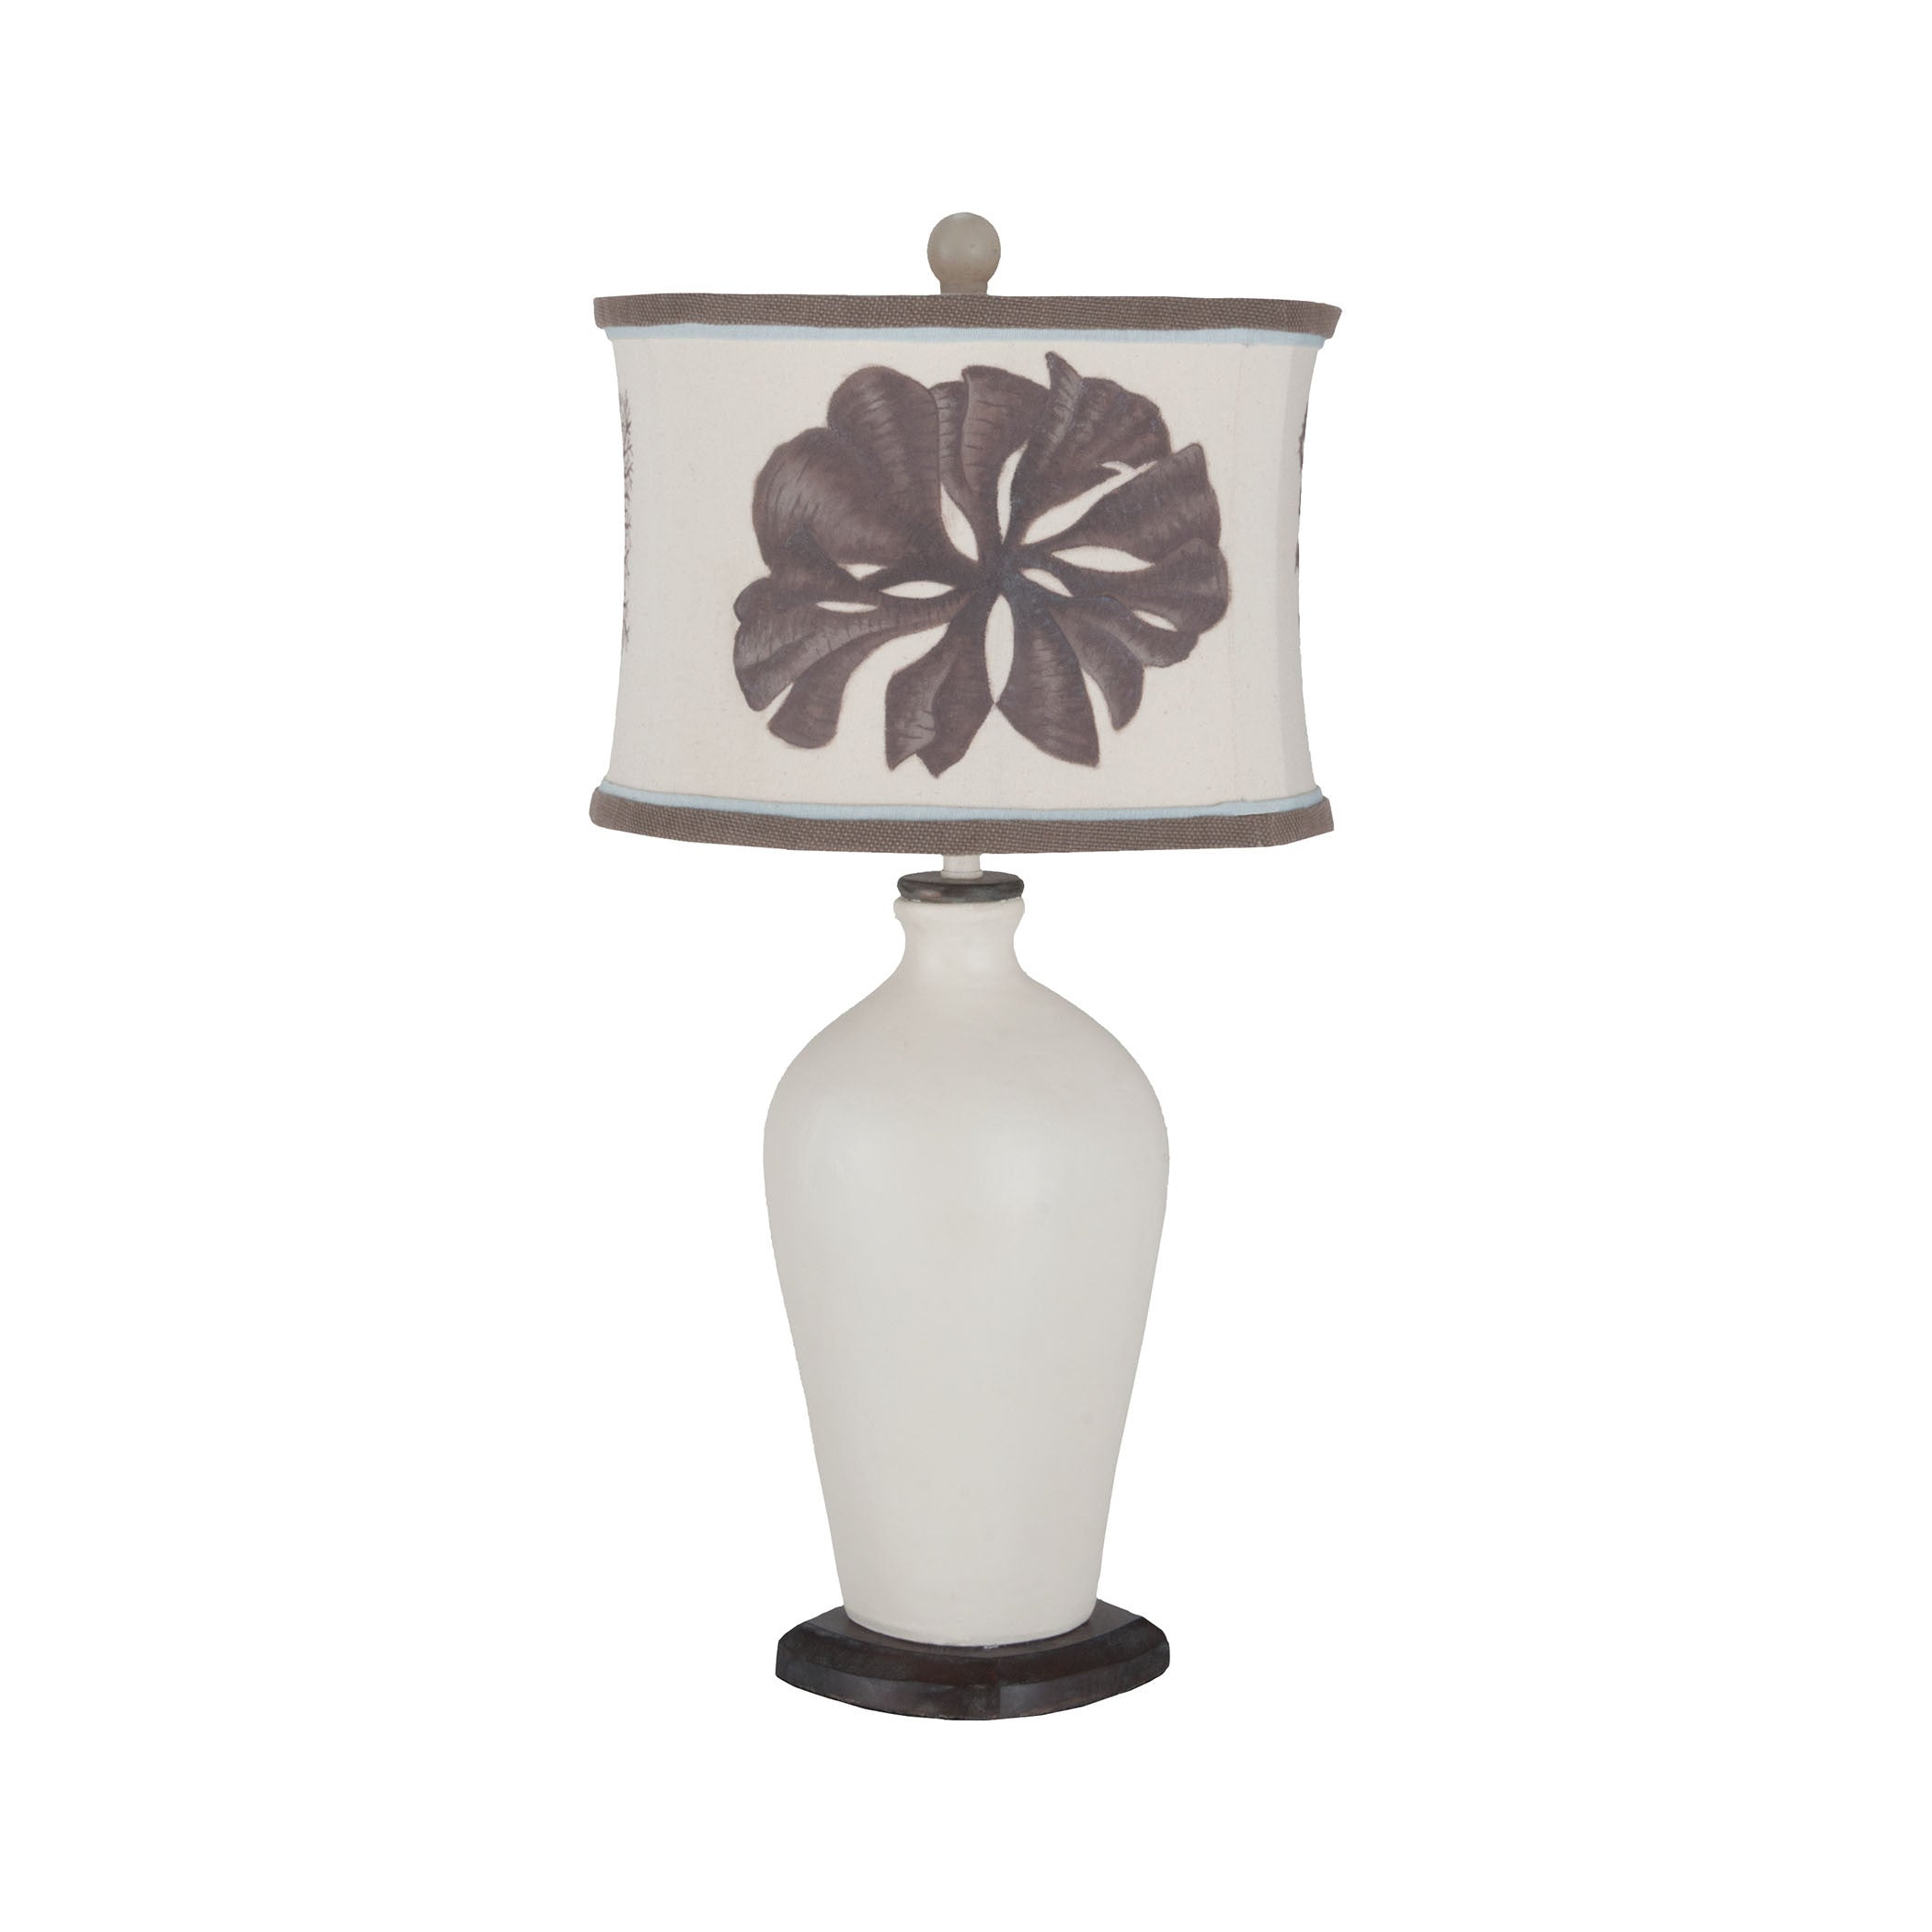 Guildmaster Gui-3516034 Terracotta Lamps Collection Vintage Bouleau Blanc Finish Table Lamp